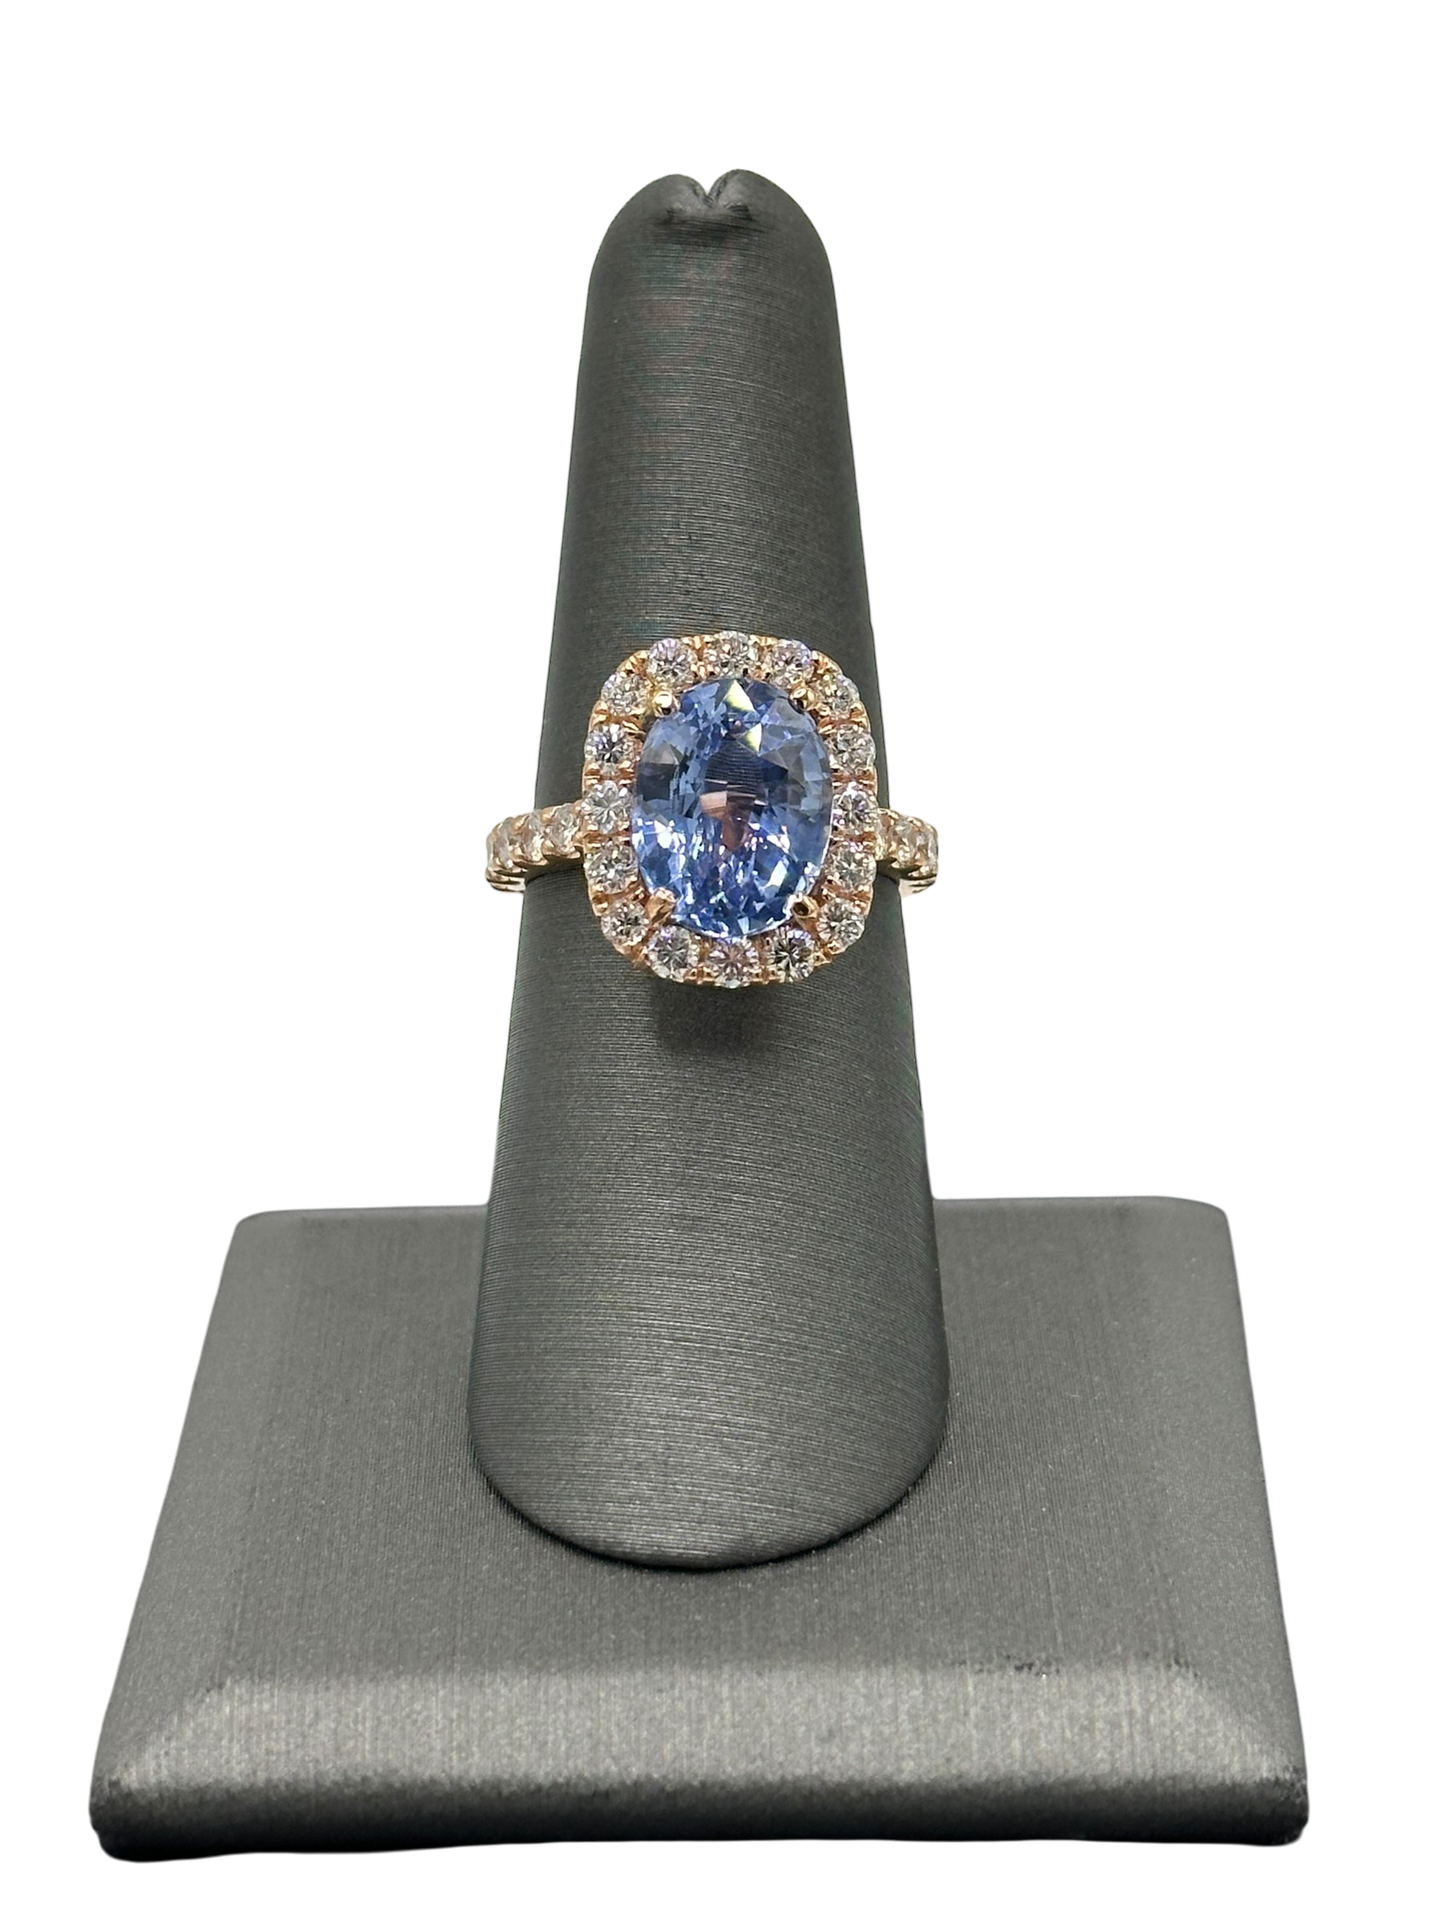 5.12ct Oval Cut Ceylon Sapphire Ring With Diamond Halo & Diamonds Down Shank